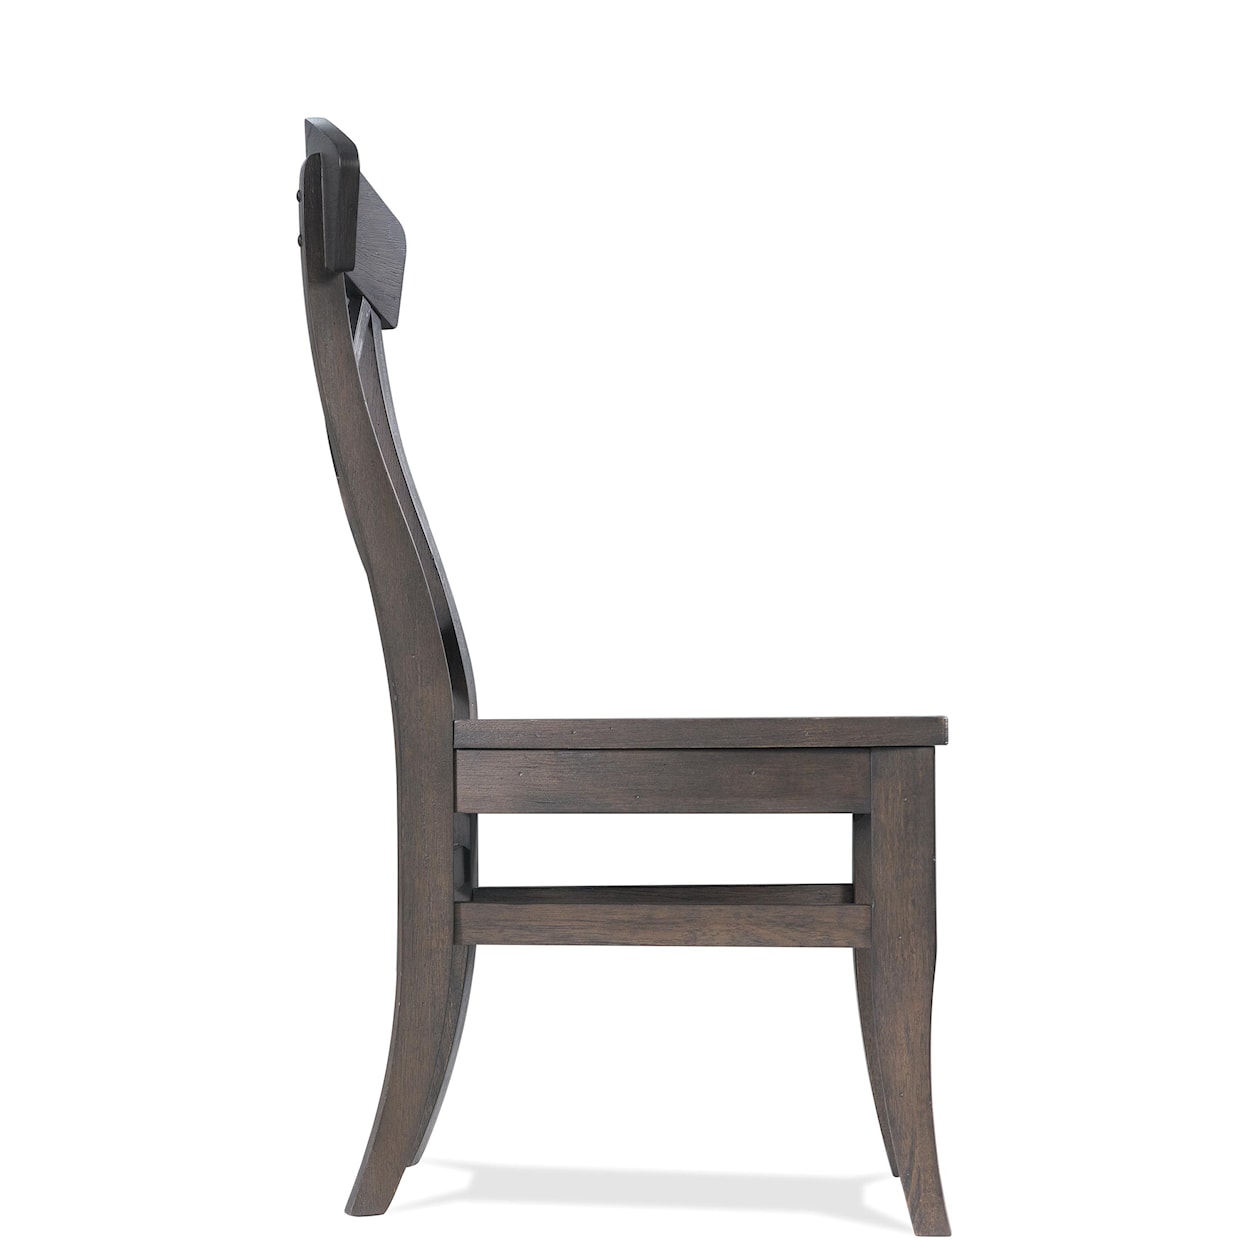 Riverside Furniture Harper X-back Side Chair